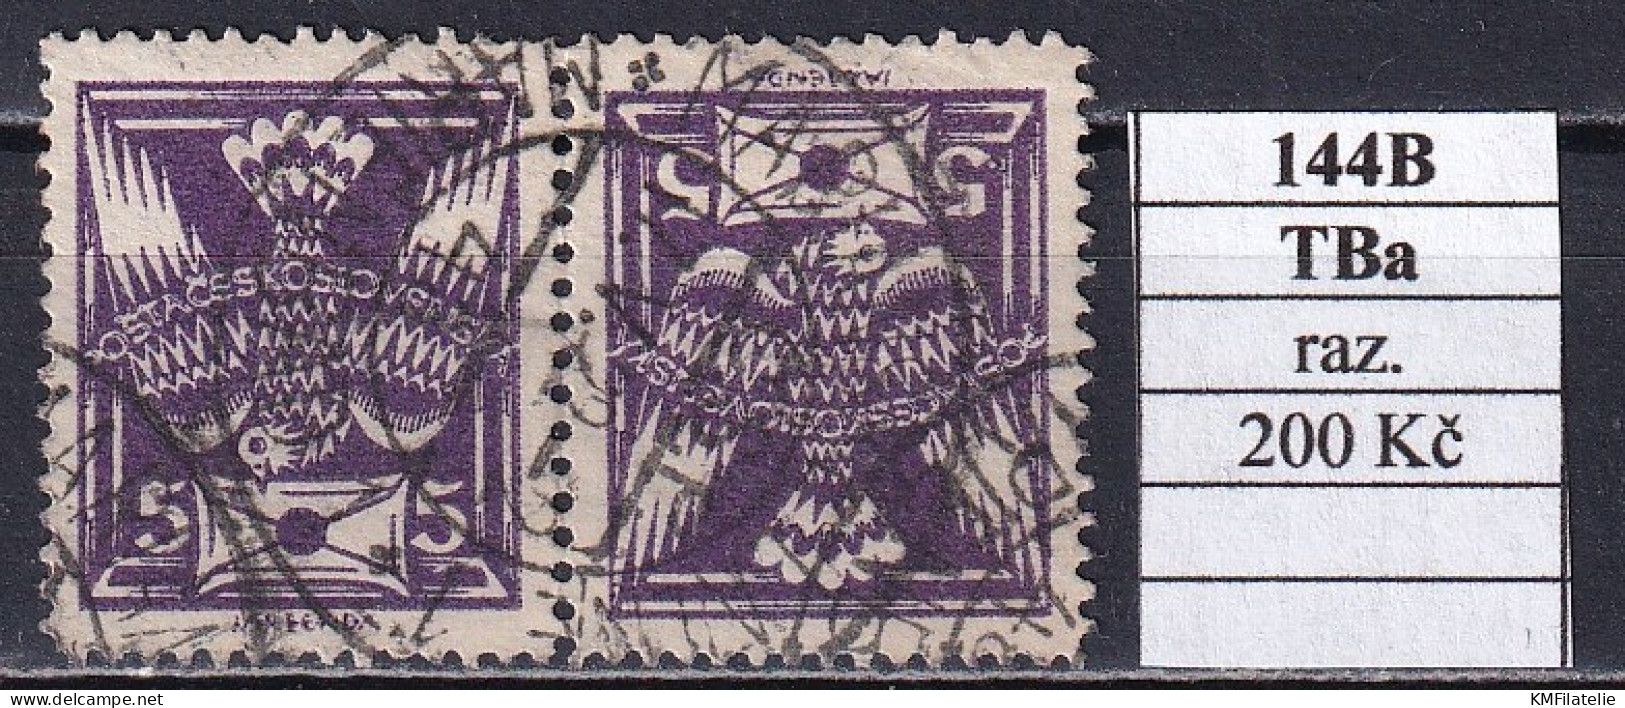 Czechoslovakia Pofis 144B TBa Used - Used Stamps